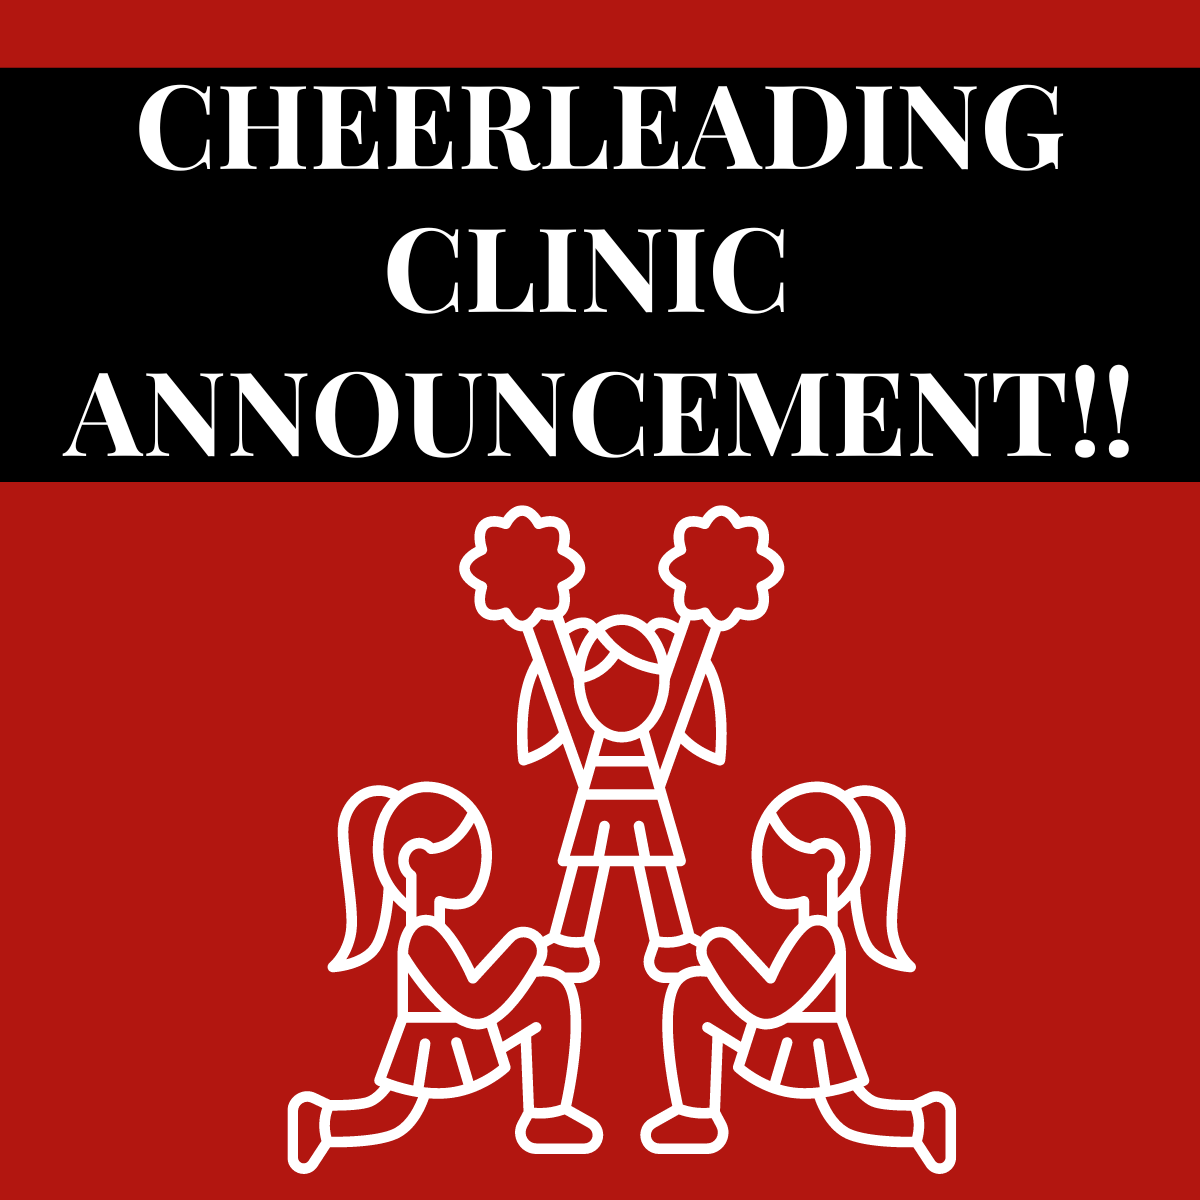 Cheerleading Clinic Announcement